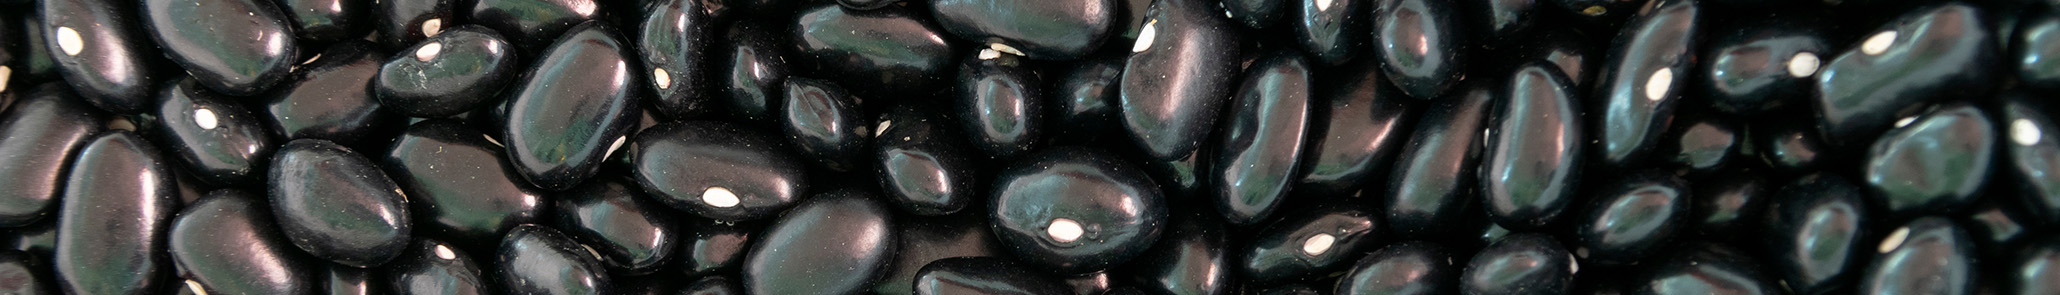 Roasted Black Beans